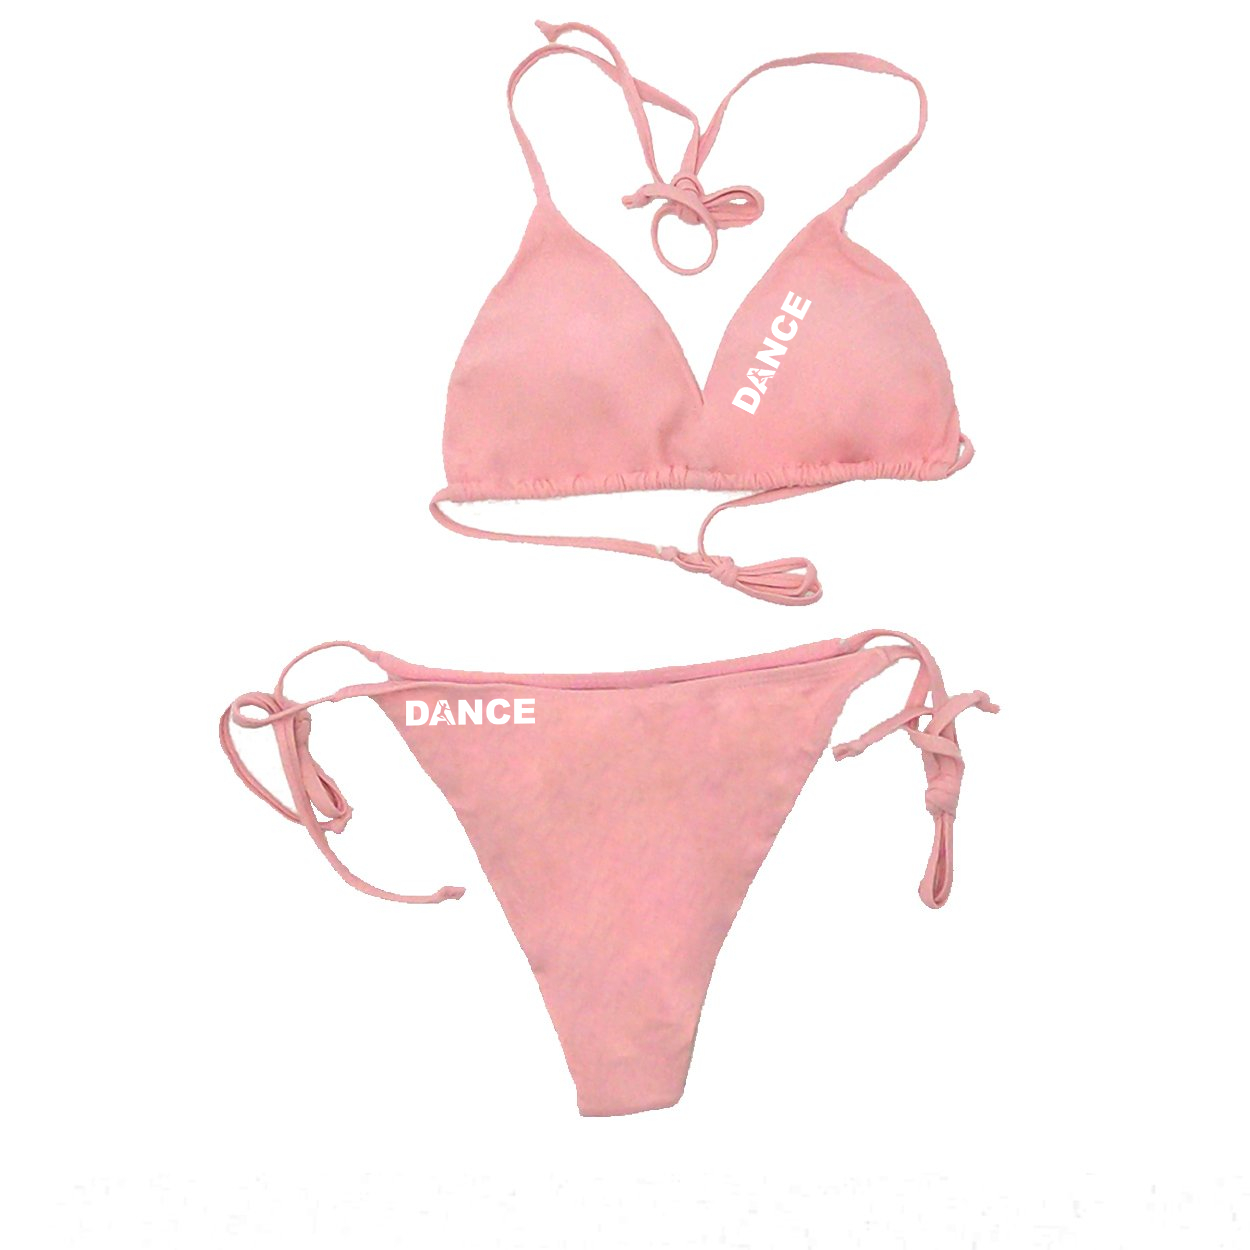 Dance Silhouette Logo Classic Womens Padded Halter Triangle Tie Side Two-Piece Swimsuit Basics Bikini Pink (White Logo)